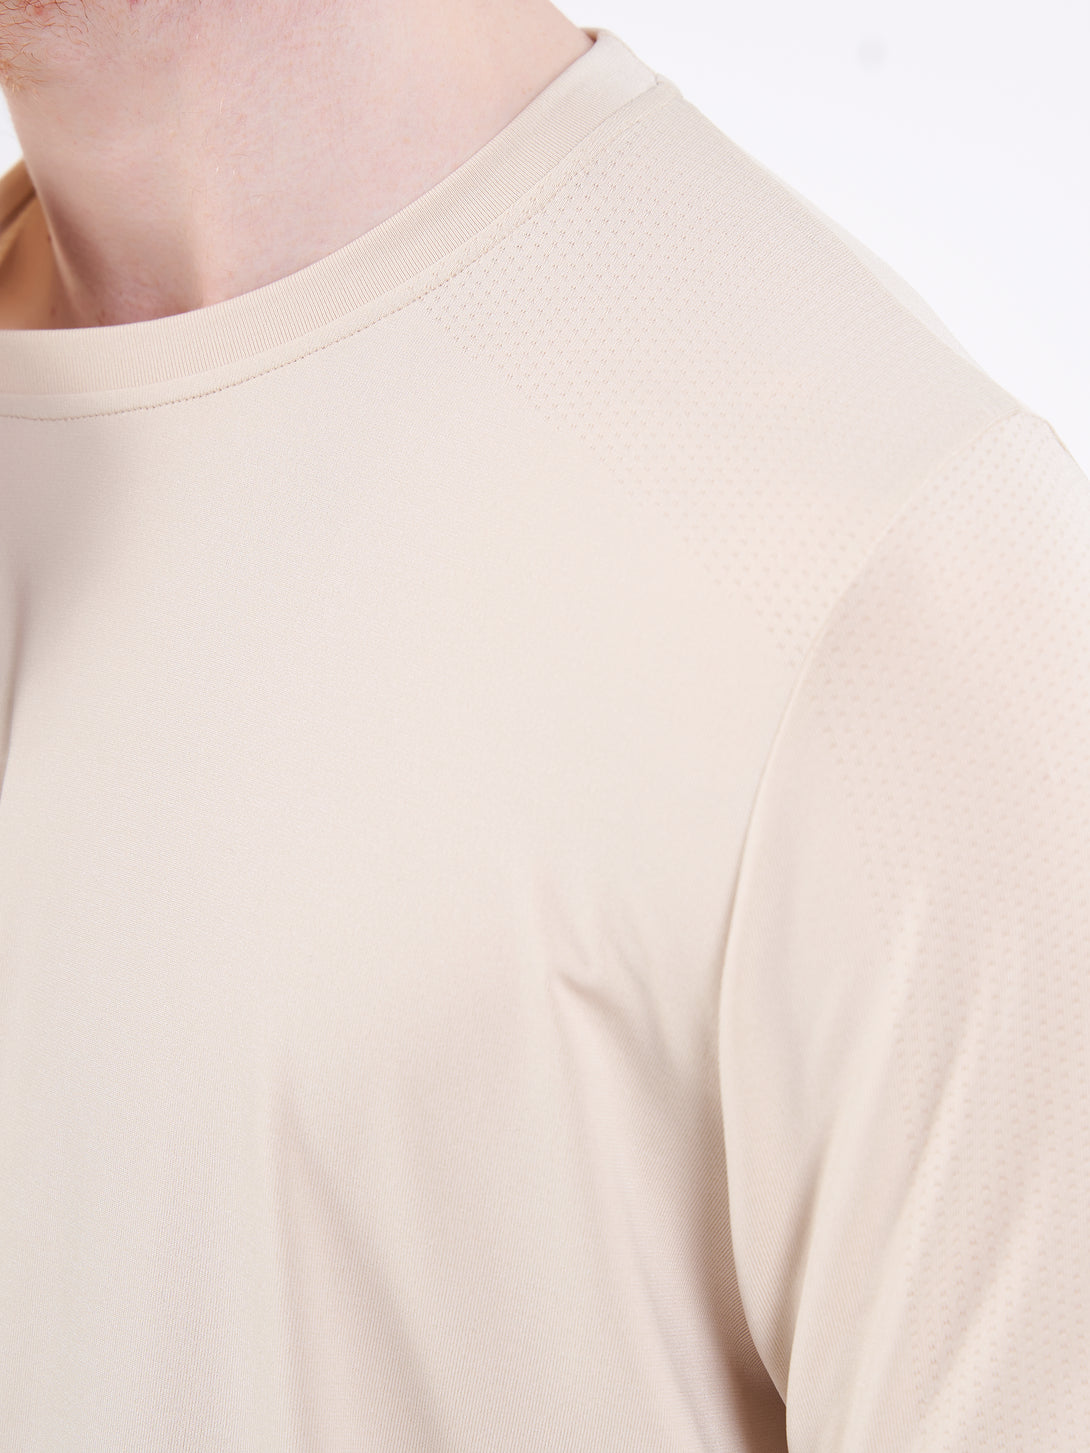 A Man Wearing White Sand Color Unisex Seamless Melange T-Shirt. Enhanced Comfort